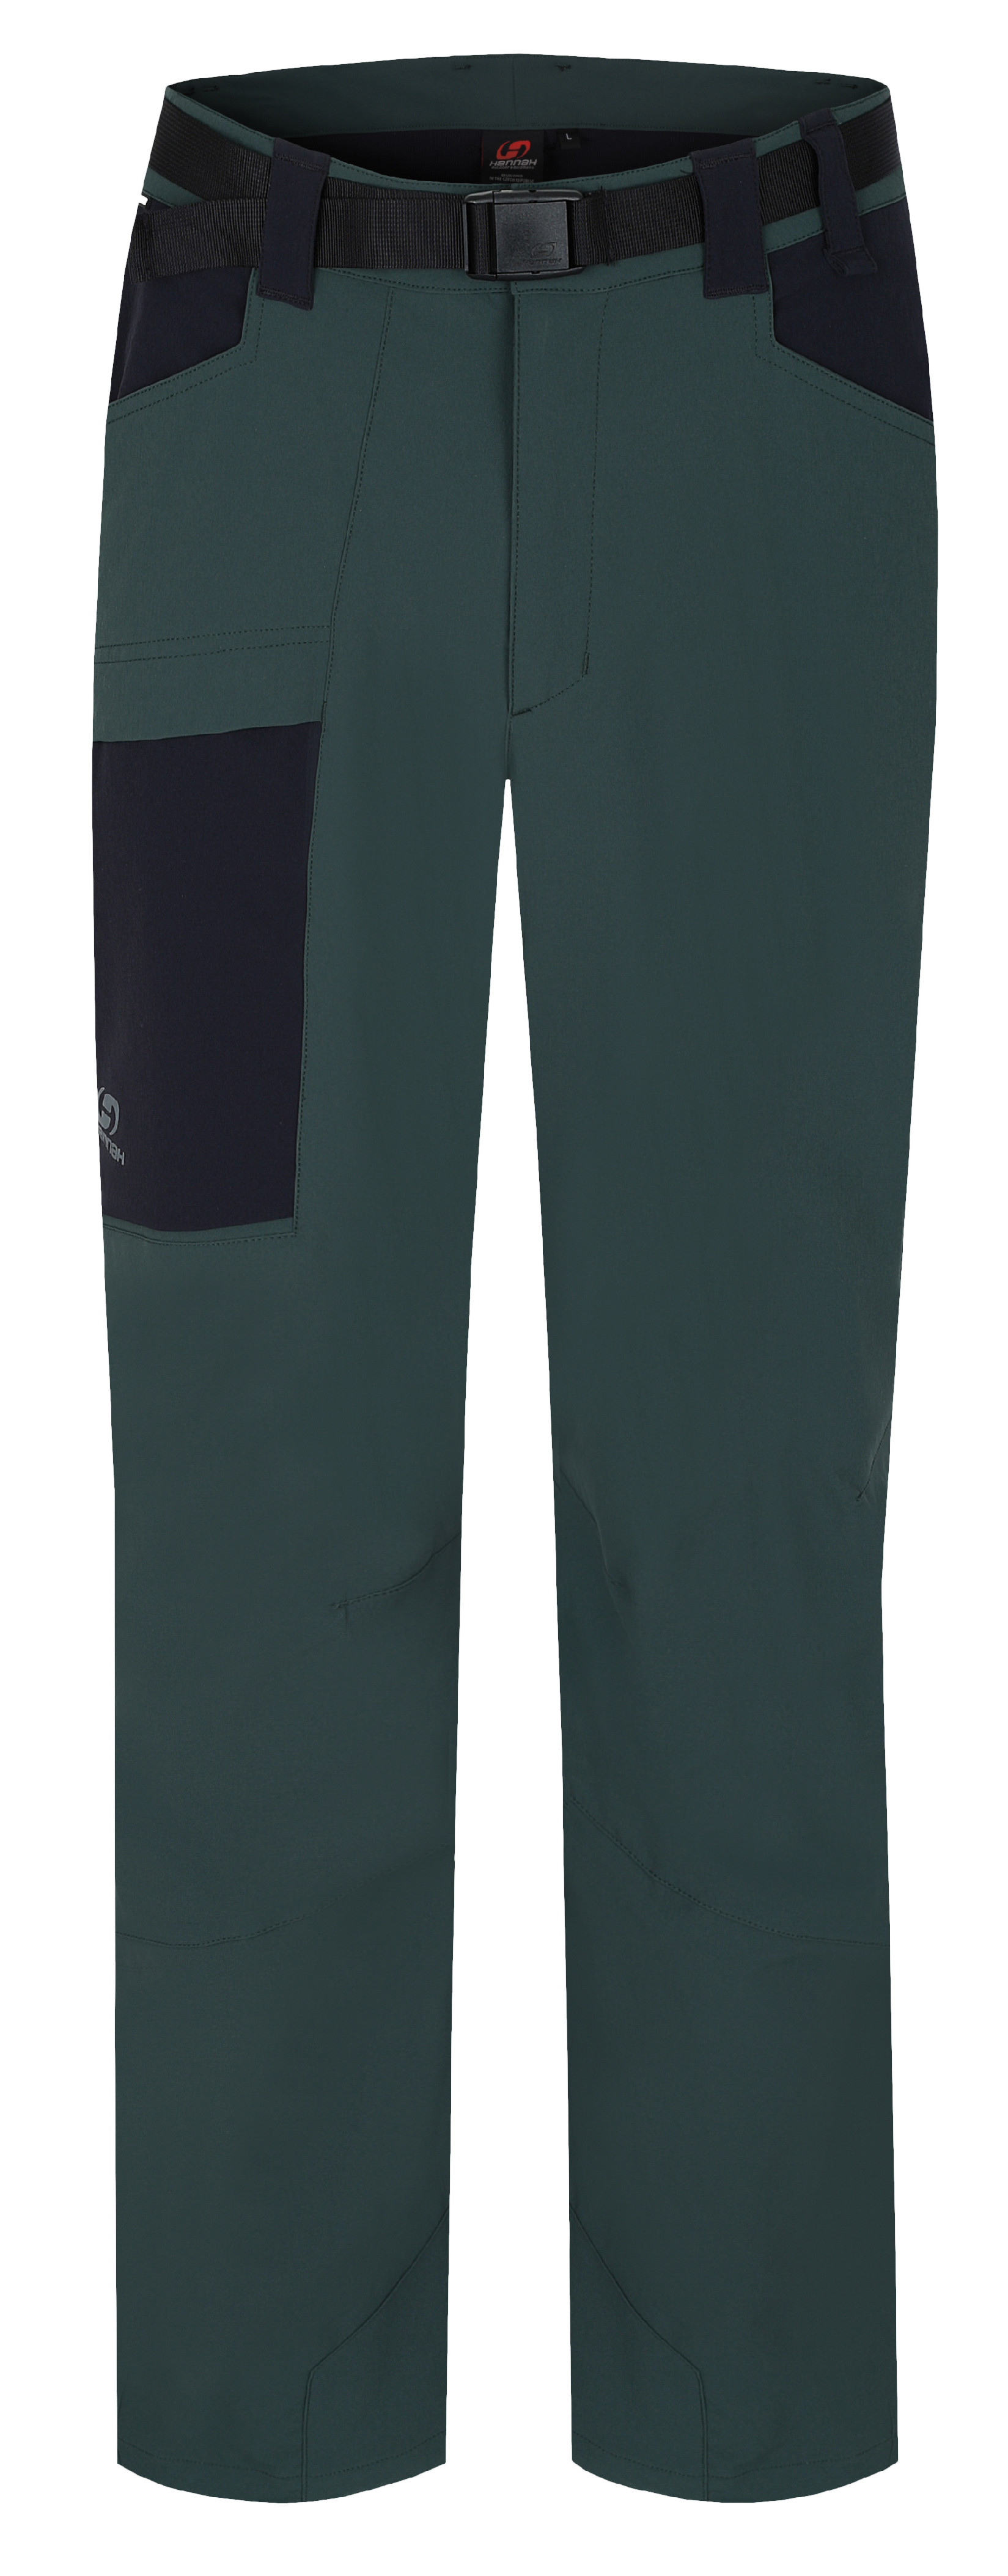 Hannah VARDEN green gables/anthracite Velikost: L pánské kalhoty